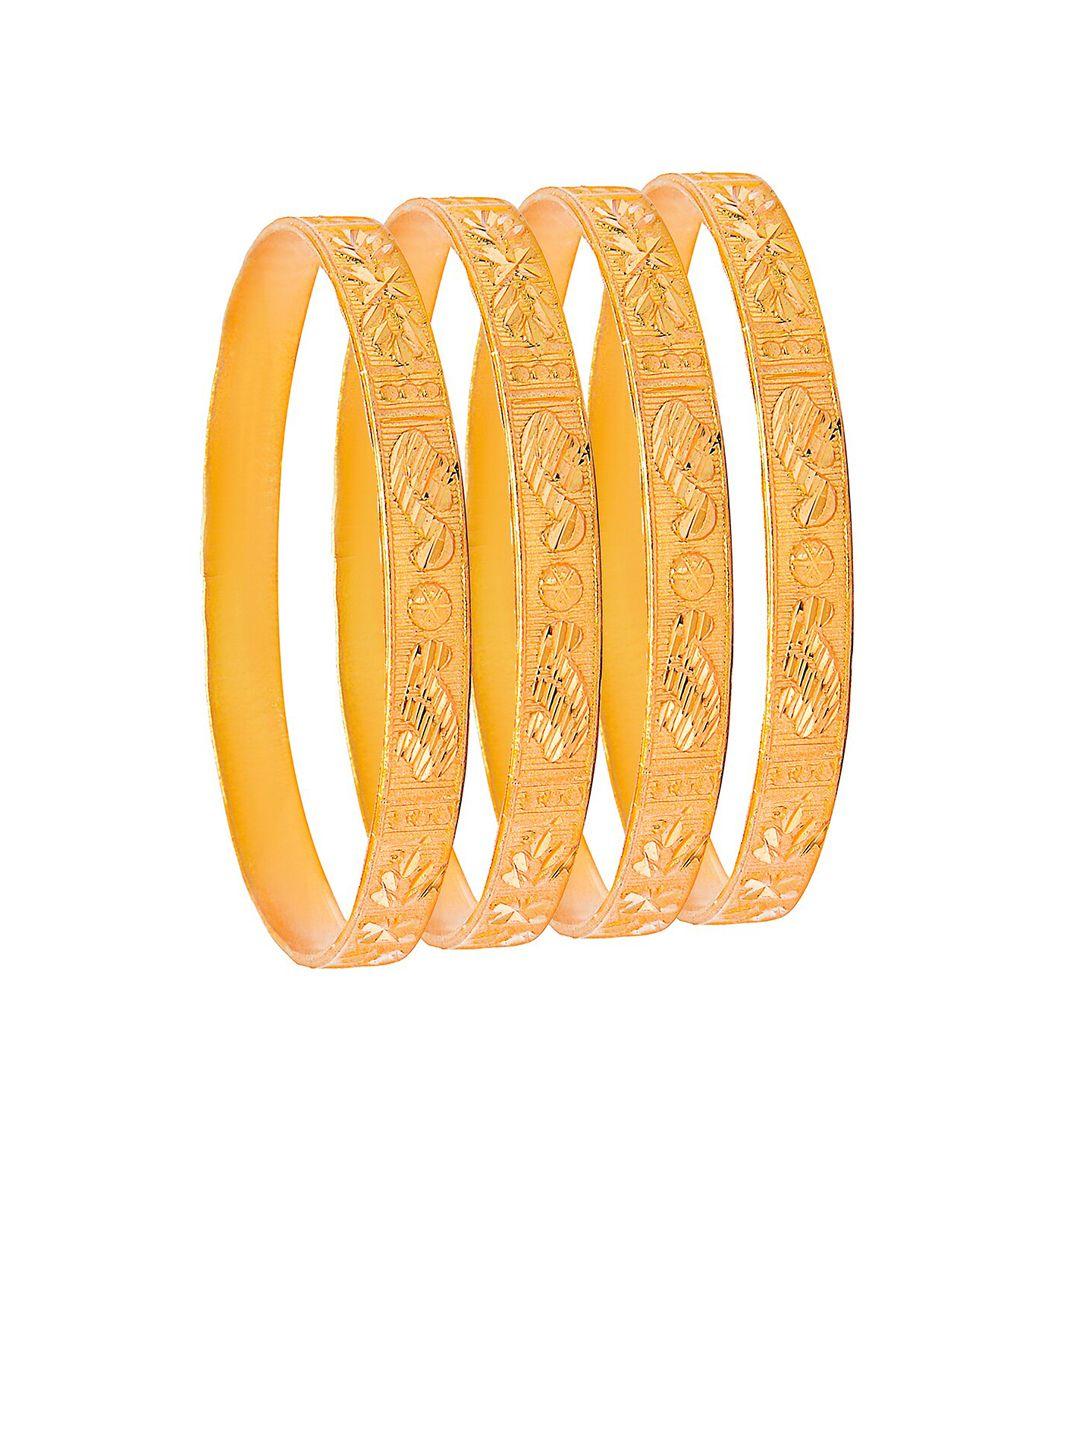 shining-jewel---by-shivansh-set-of-4-gold-plated-traditional-bangles